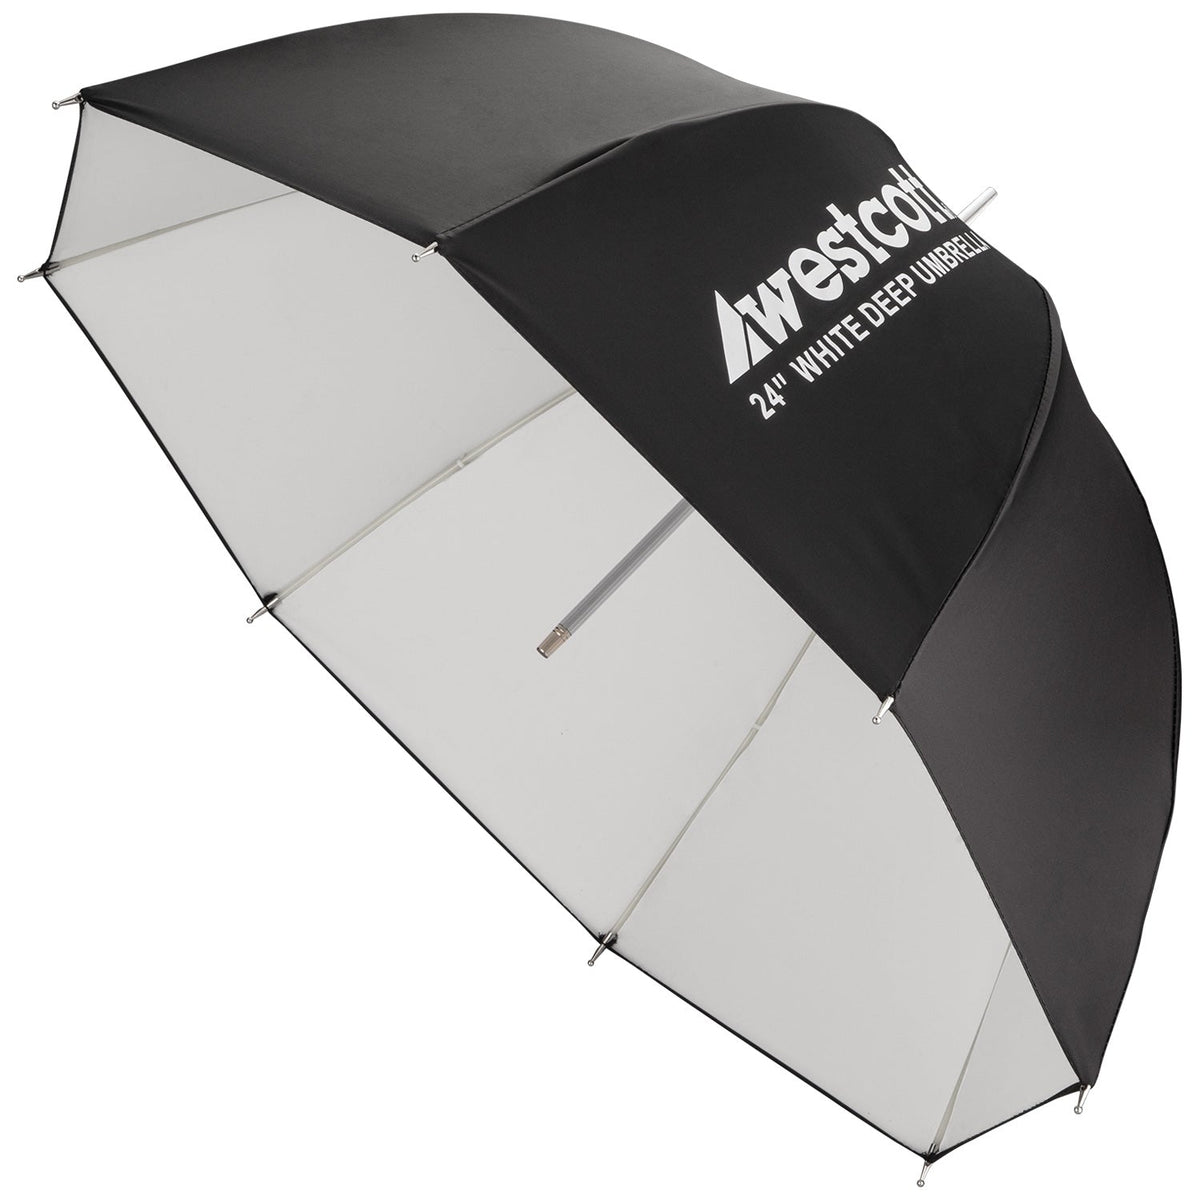 #5628 – 24" Apollo Deep Umbrella with White Interior